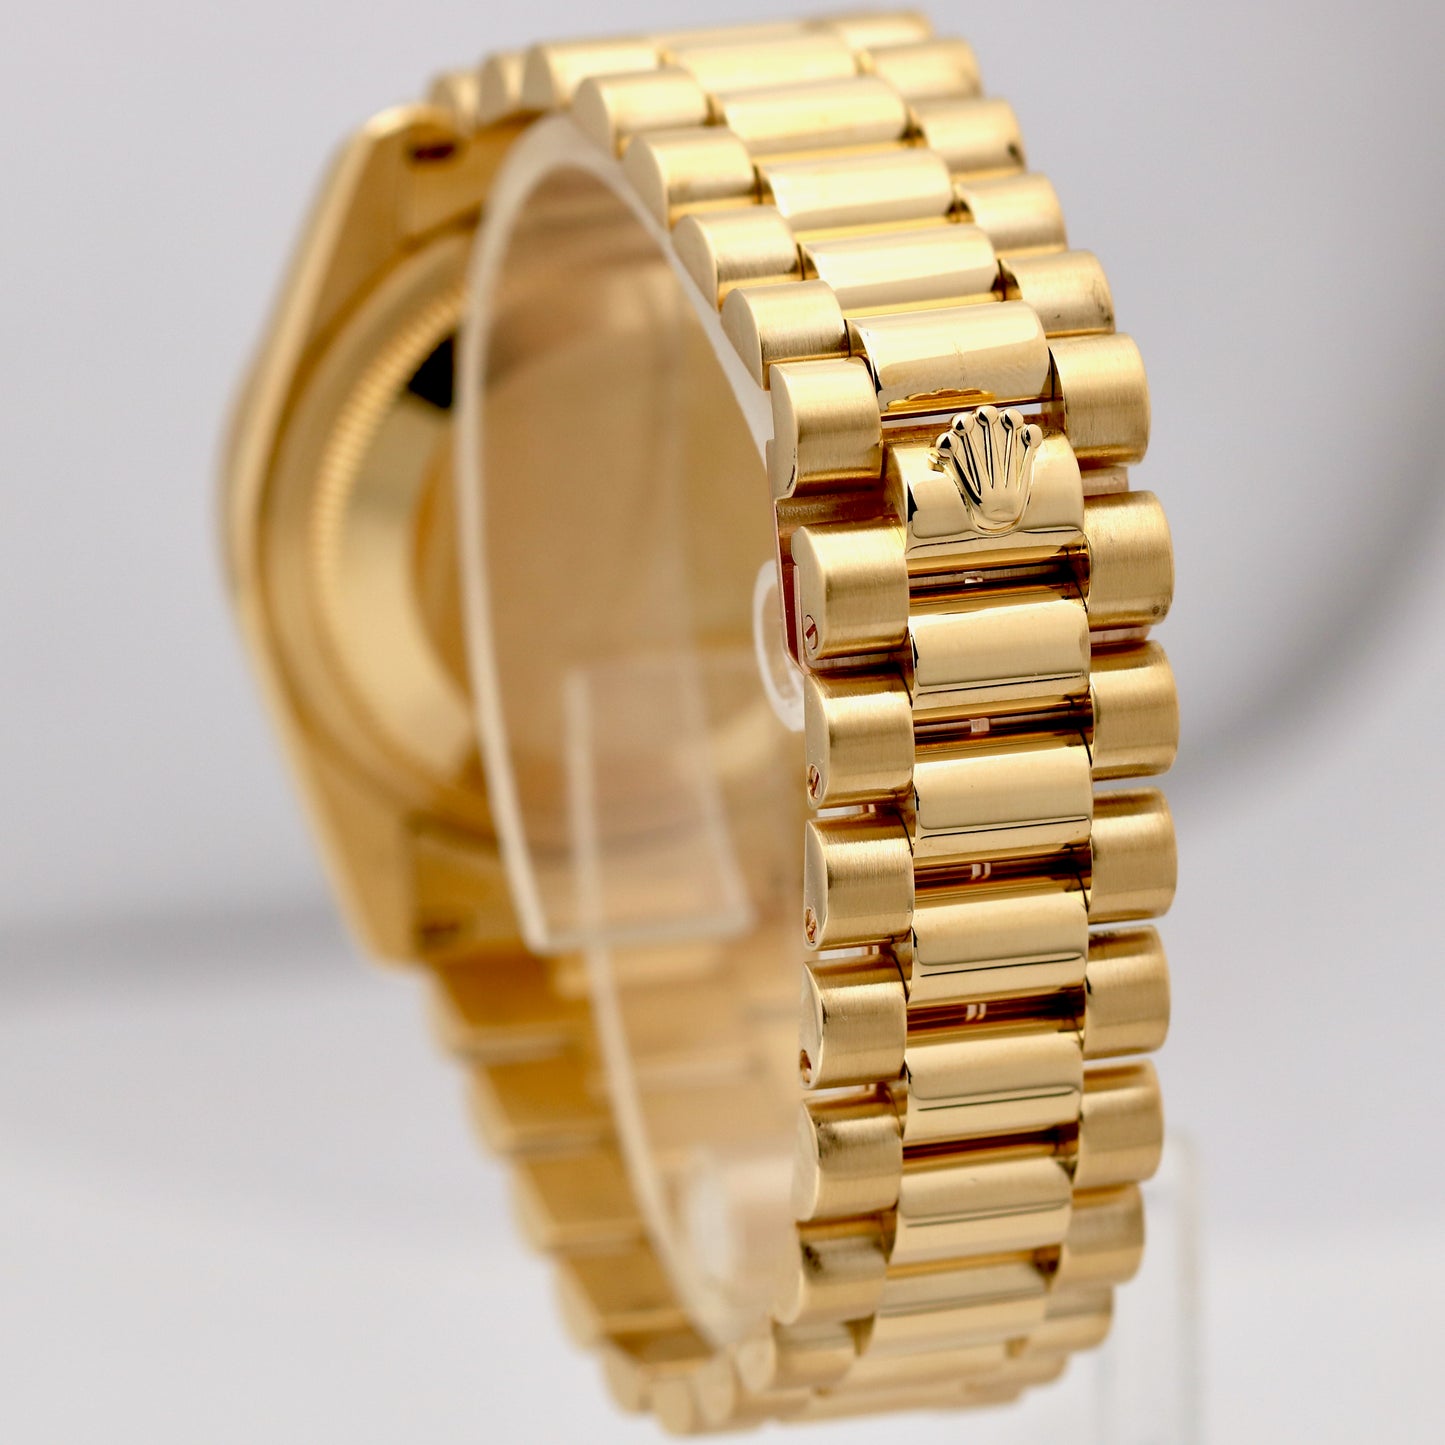 MINT Rolex Day-Date President HEAVY BAND 18K Gold DIAMOND 118238 36mm Watch